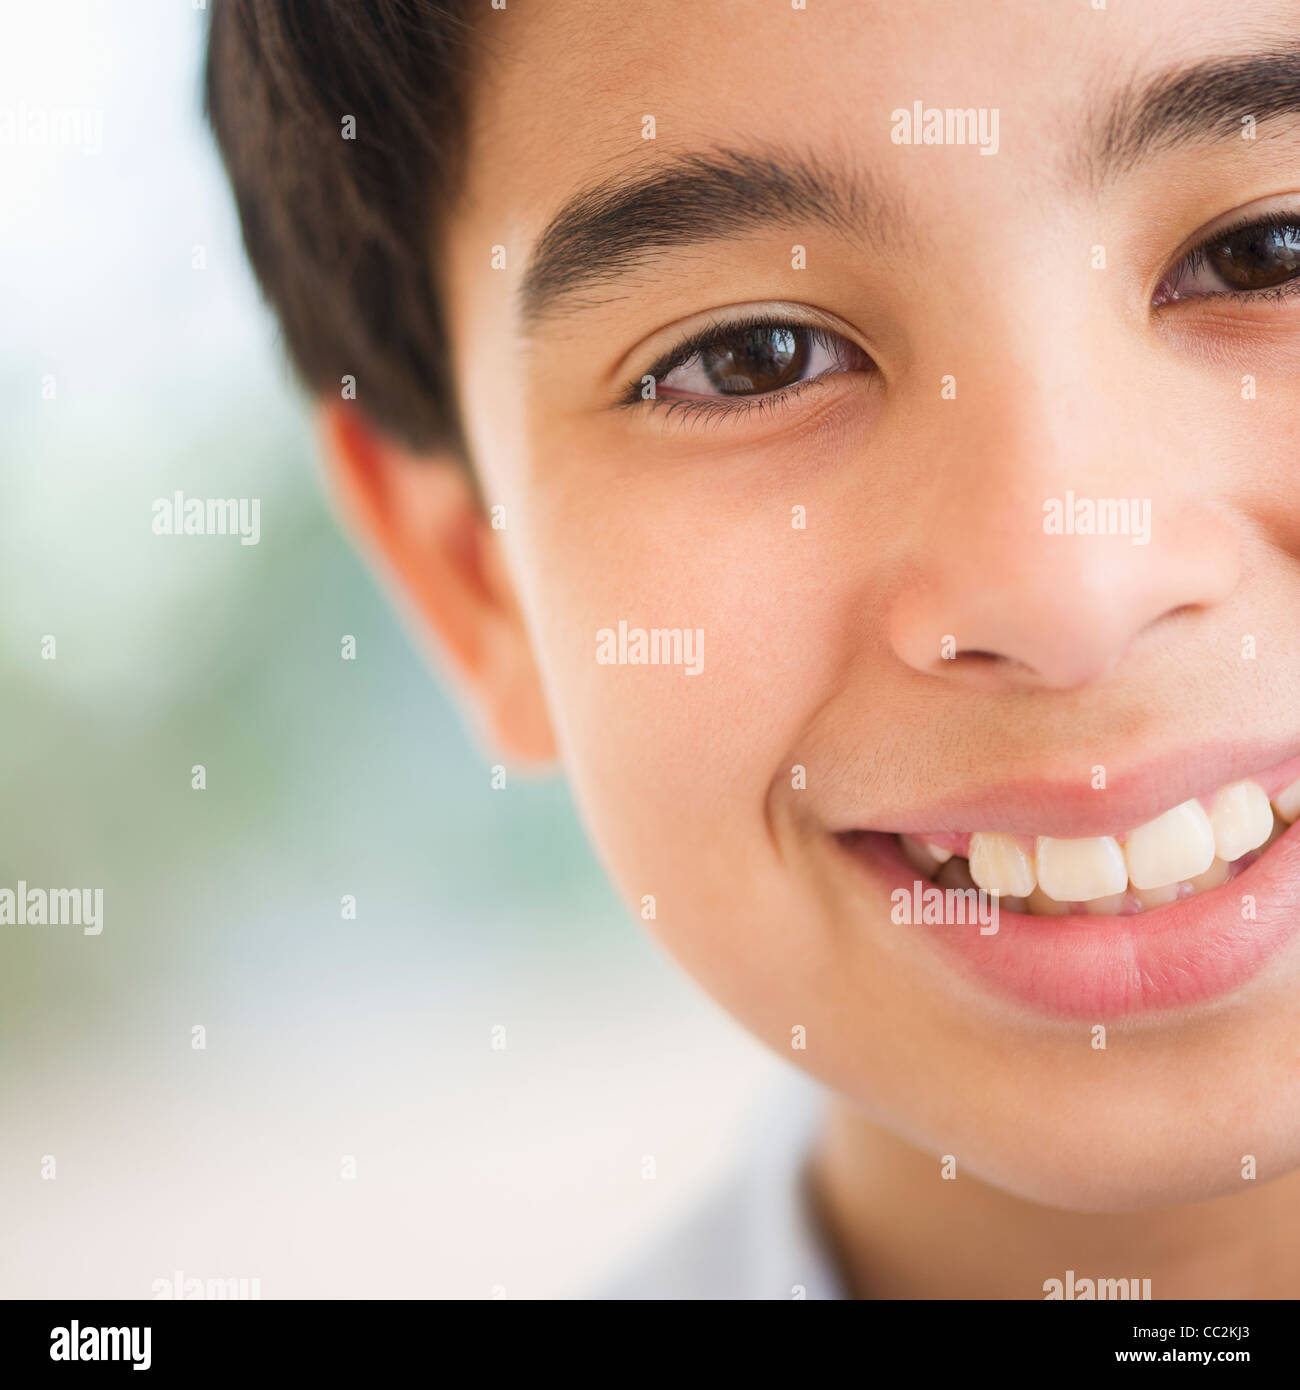 USA, New Jersey, Jersey City, Portrait of smiling boy (12-13) Stock Photo